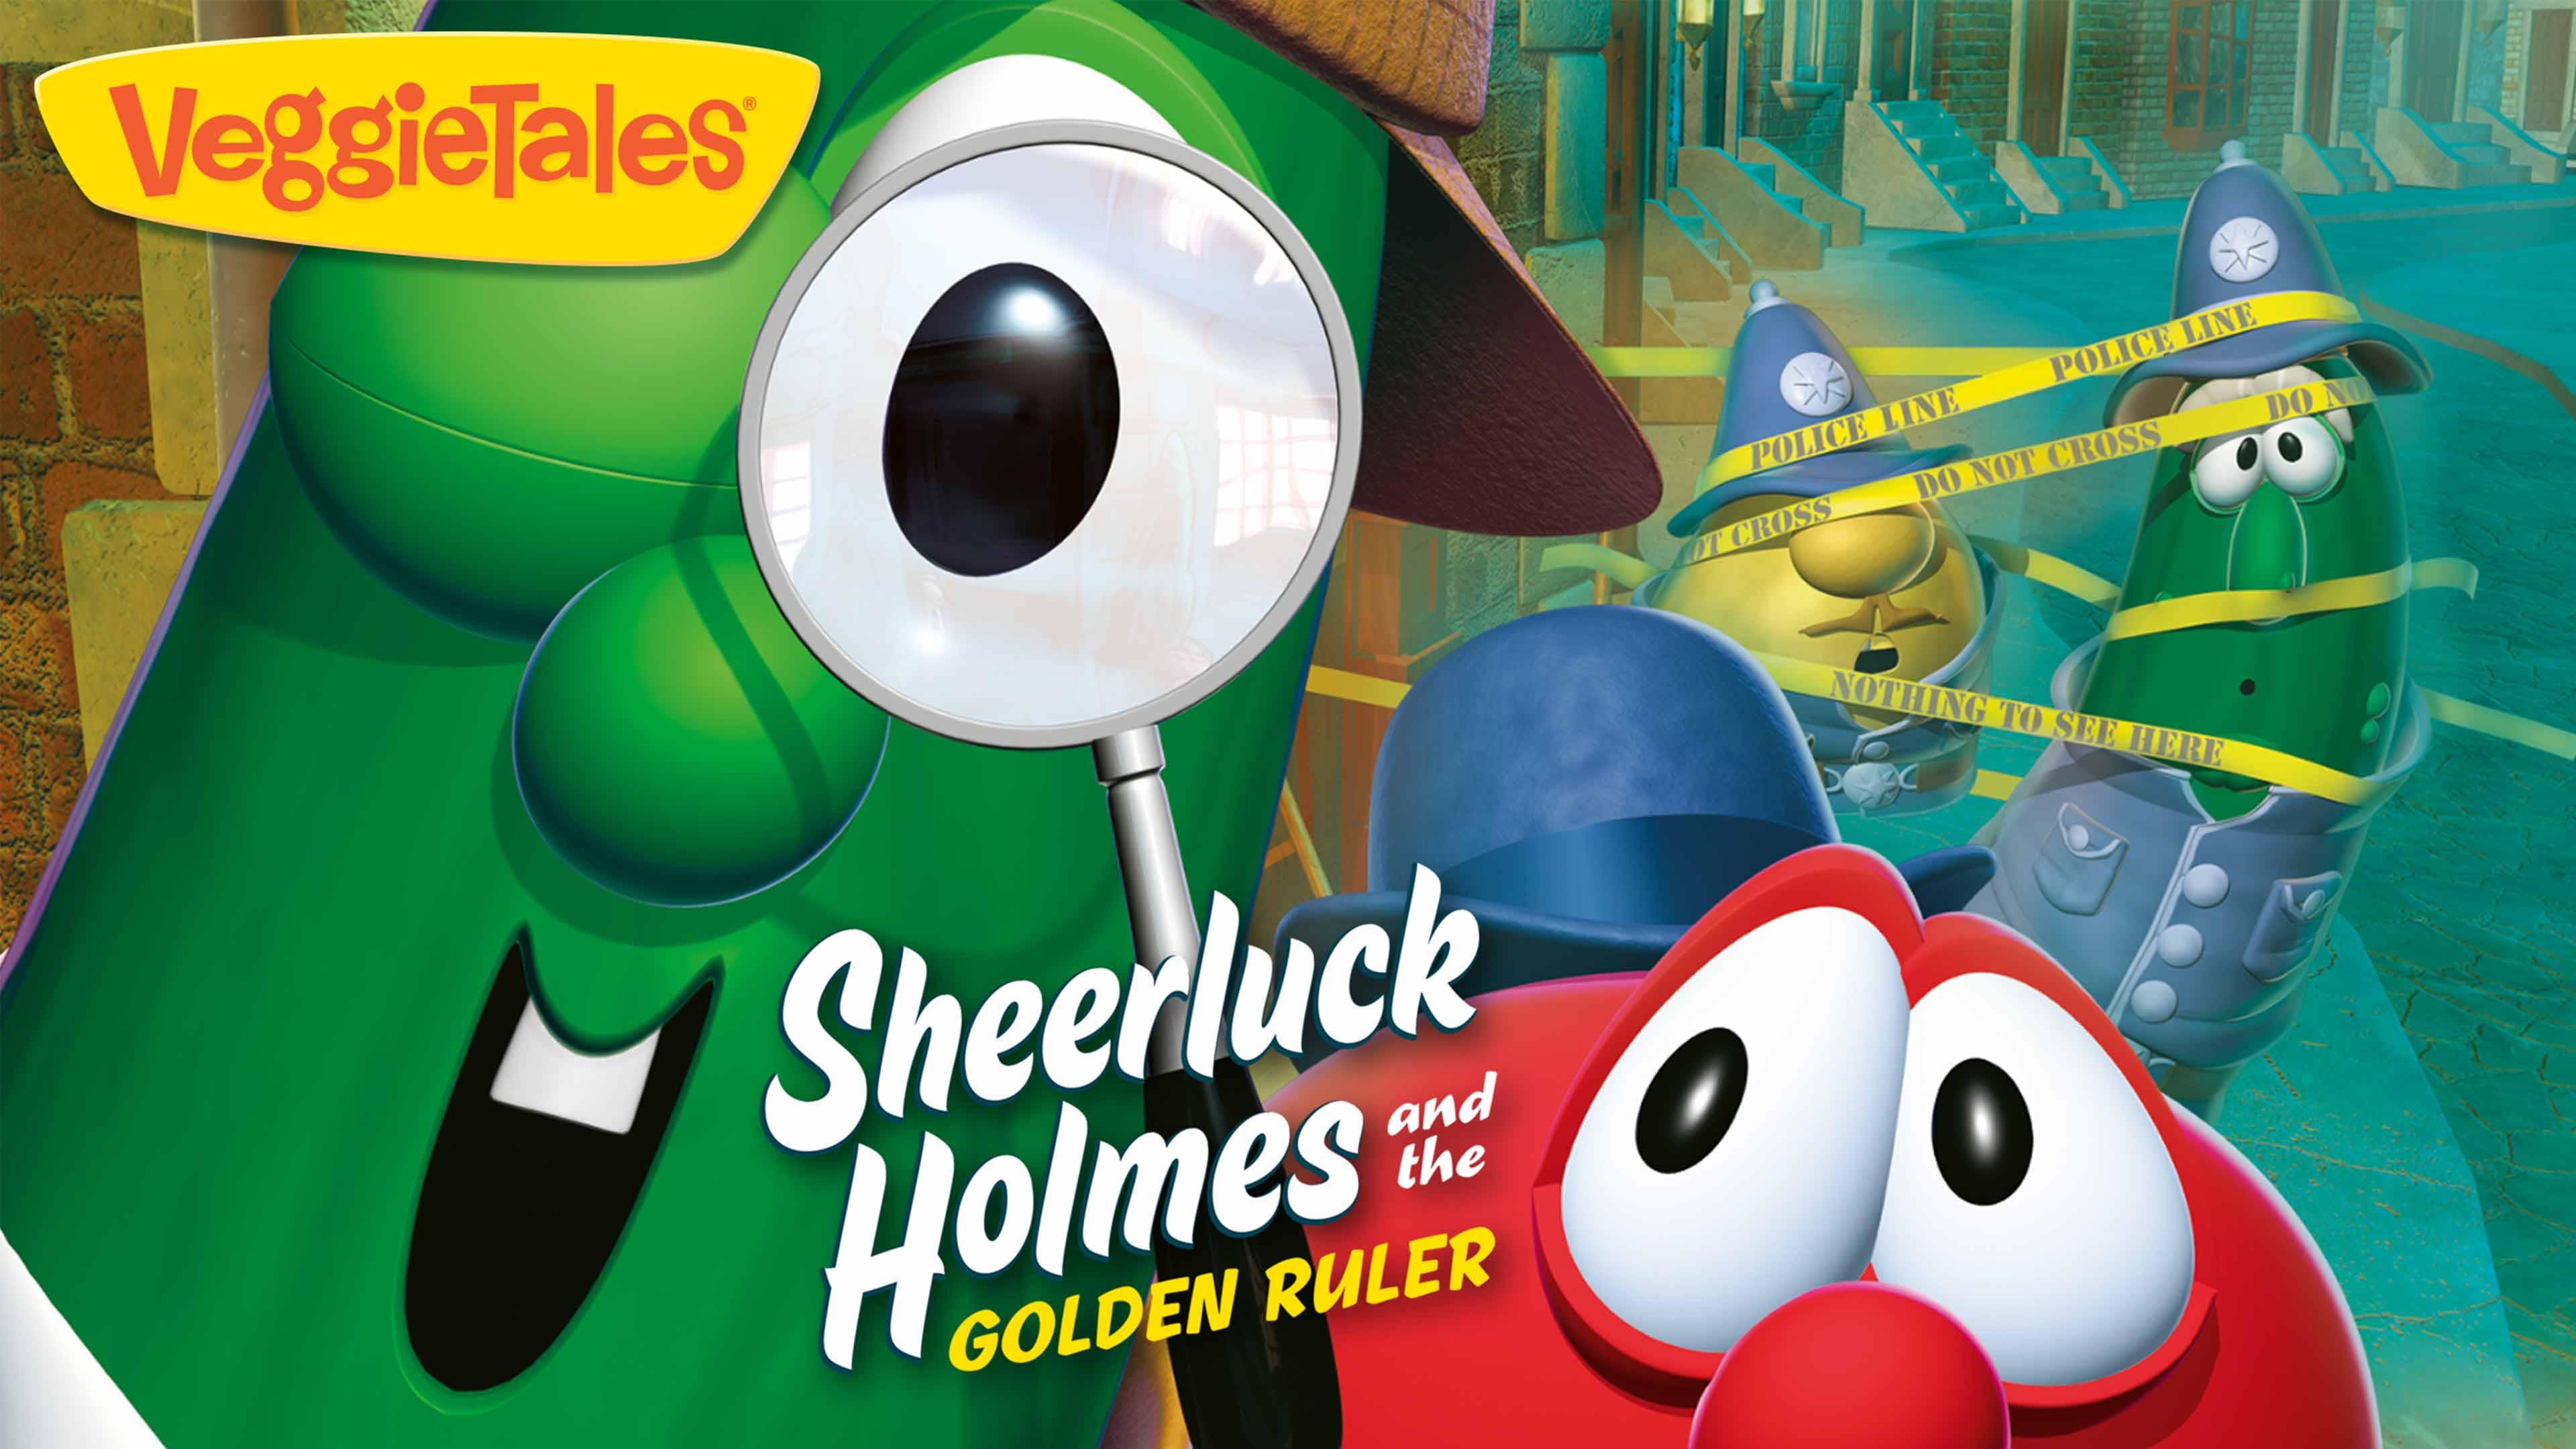 VeggieTales: Sheerluck Holmes and the Golden Ruler backdrop